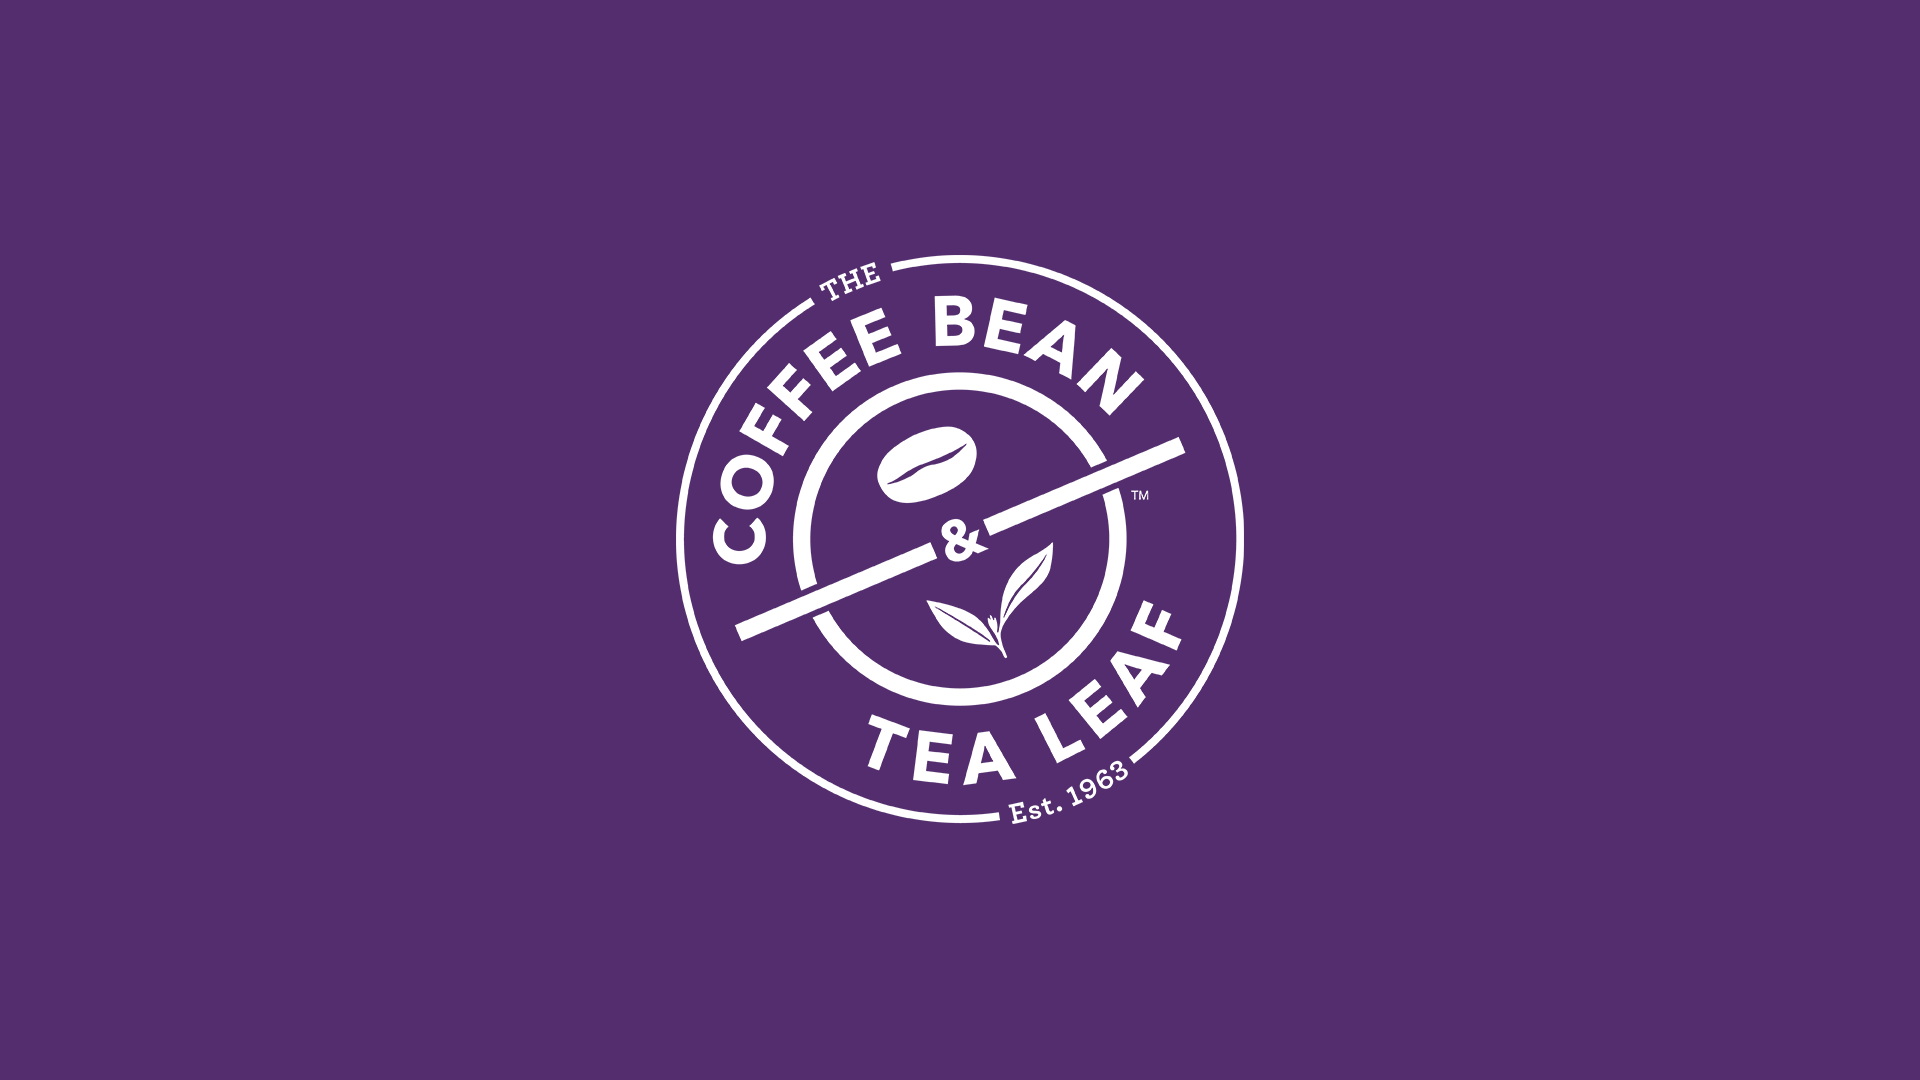 The Coffee Bean and Tea Leaf gift card 